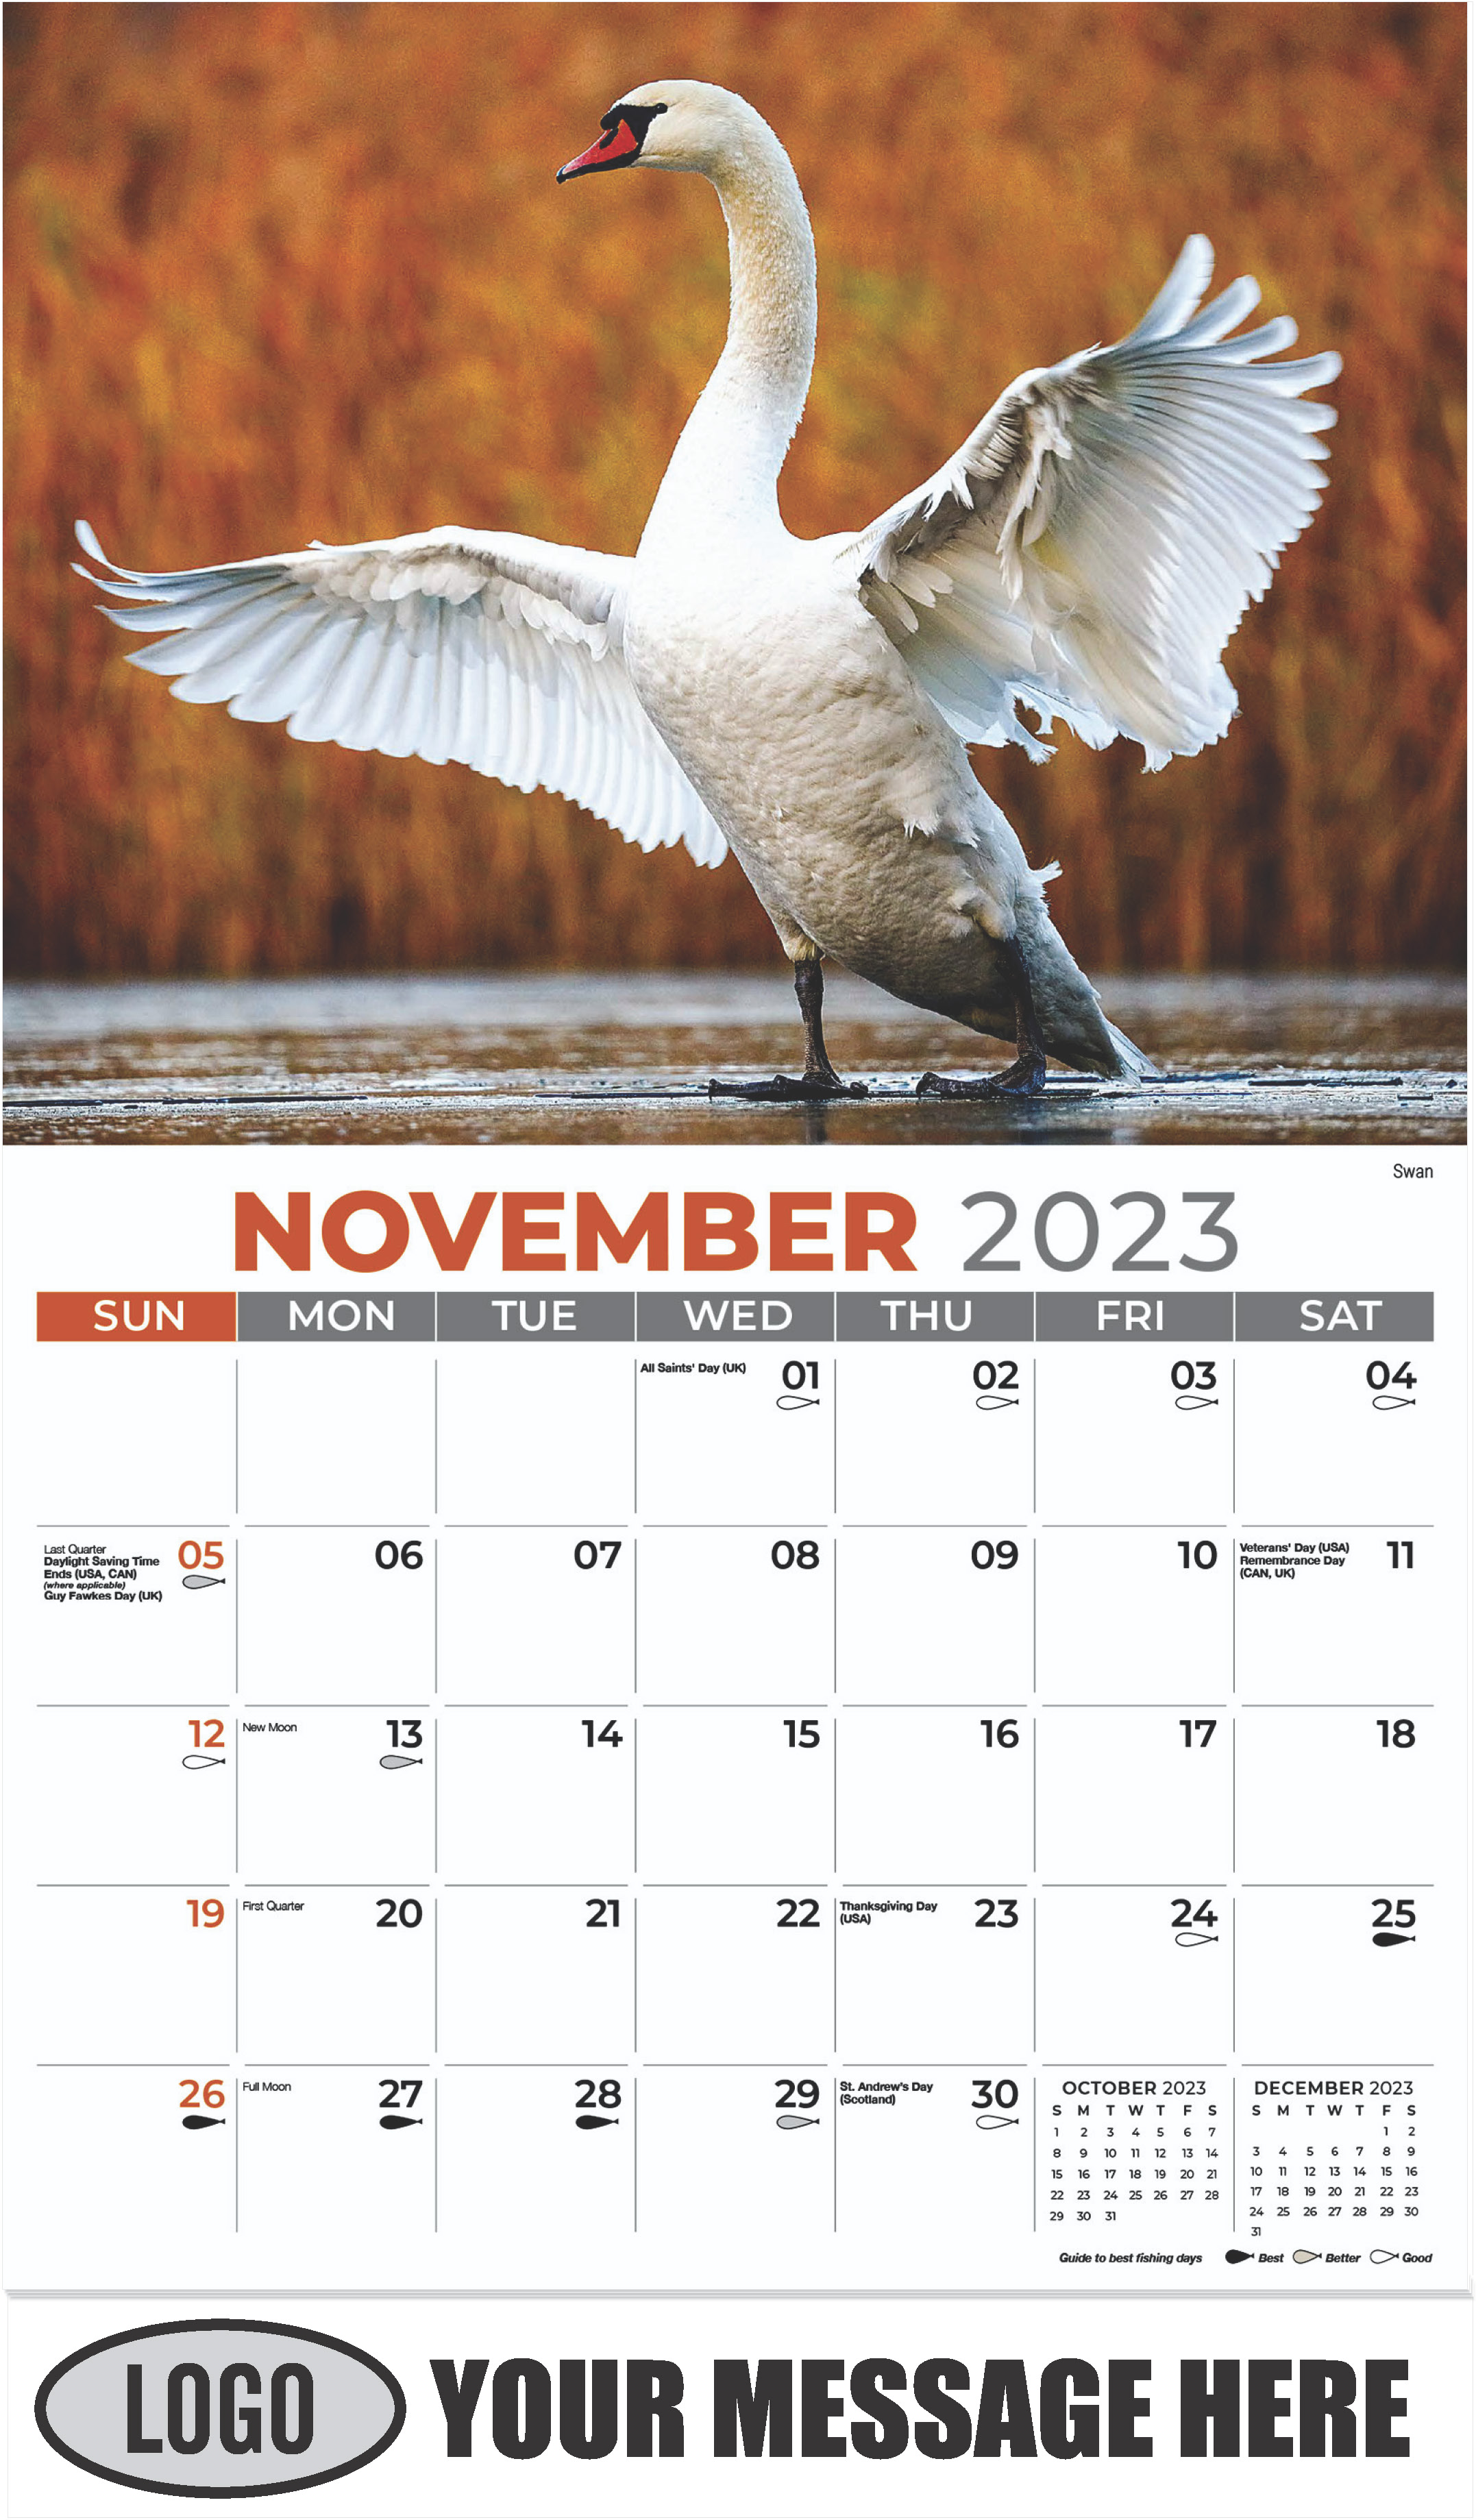 Swan - November - North American Wildlife 2023 Promotional Calendar